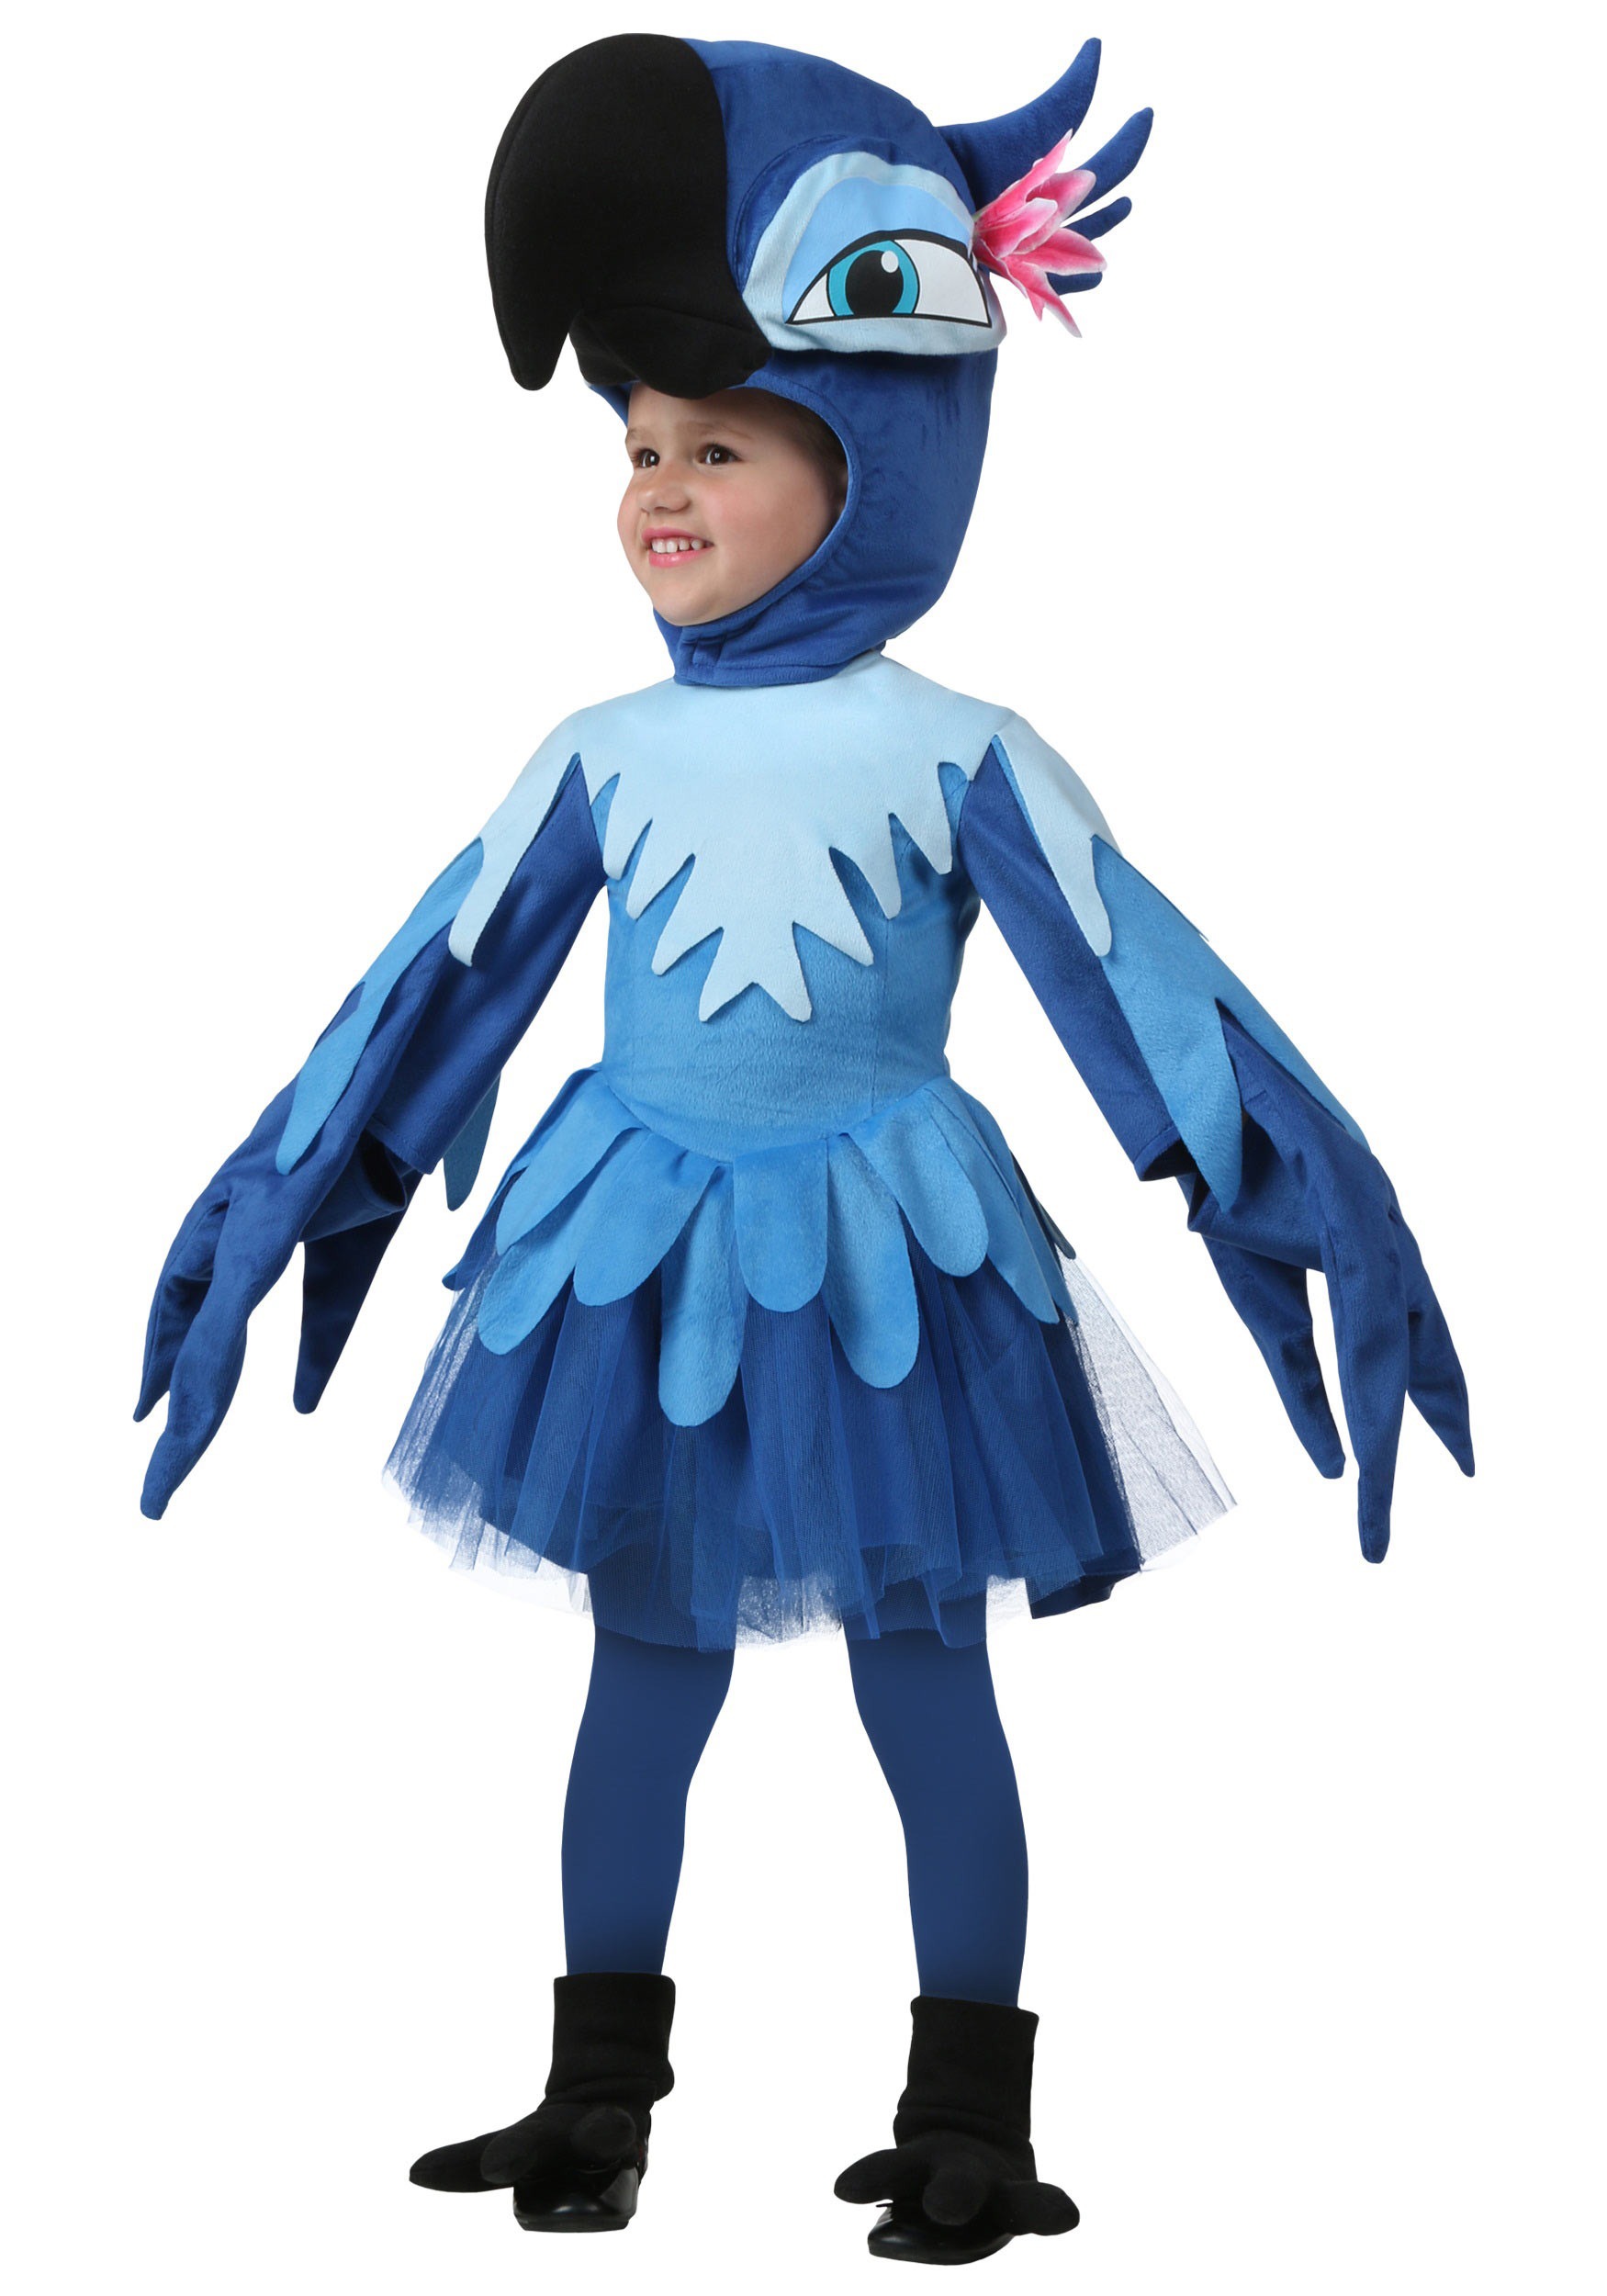 FUN Costumes Toddler Rio Jewel Costume from Fun.com Fandom.